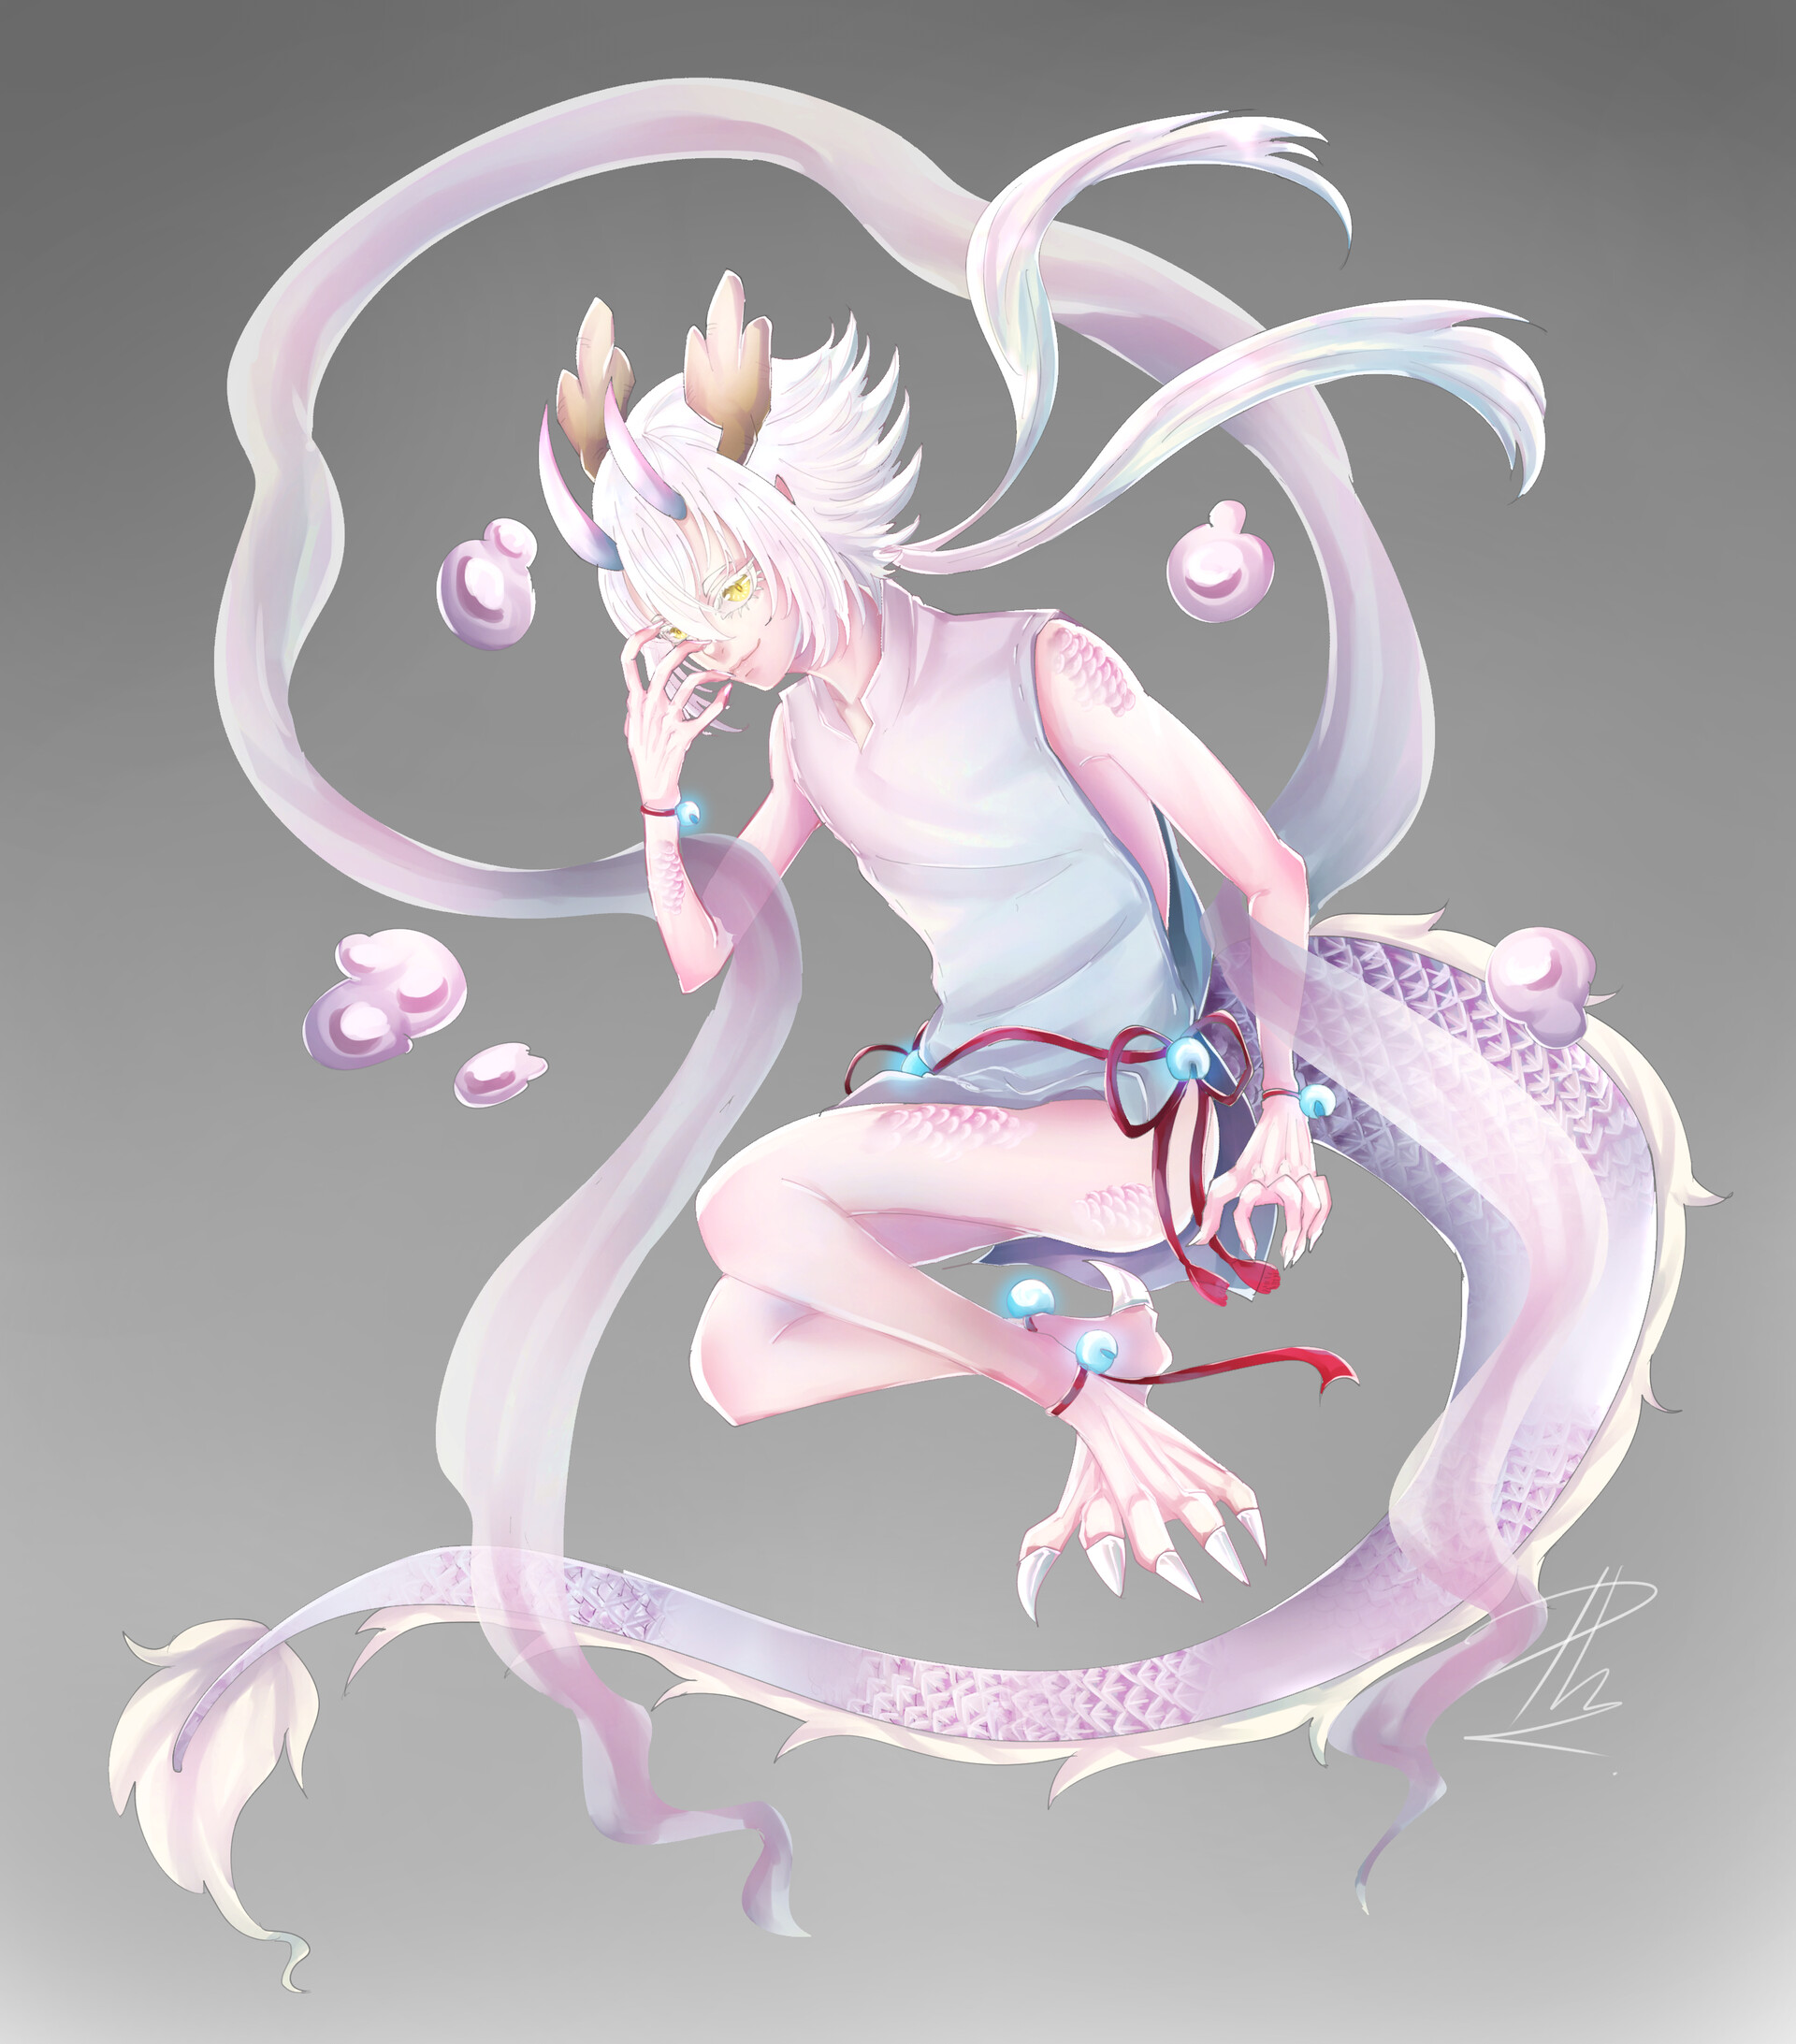 white dragon - Other & Anime Background Wallpapers on Desktop Nexus (Image  570790)